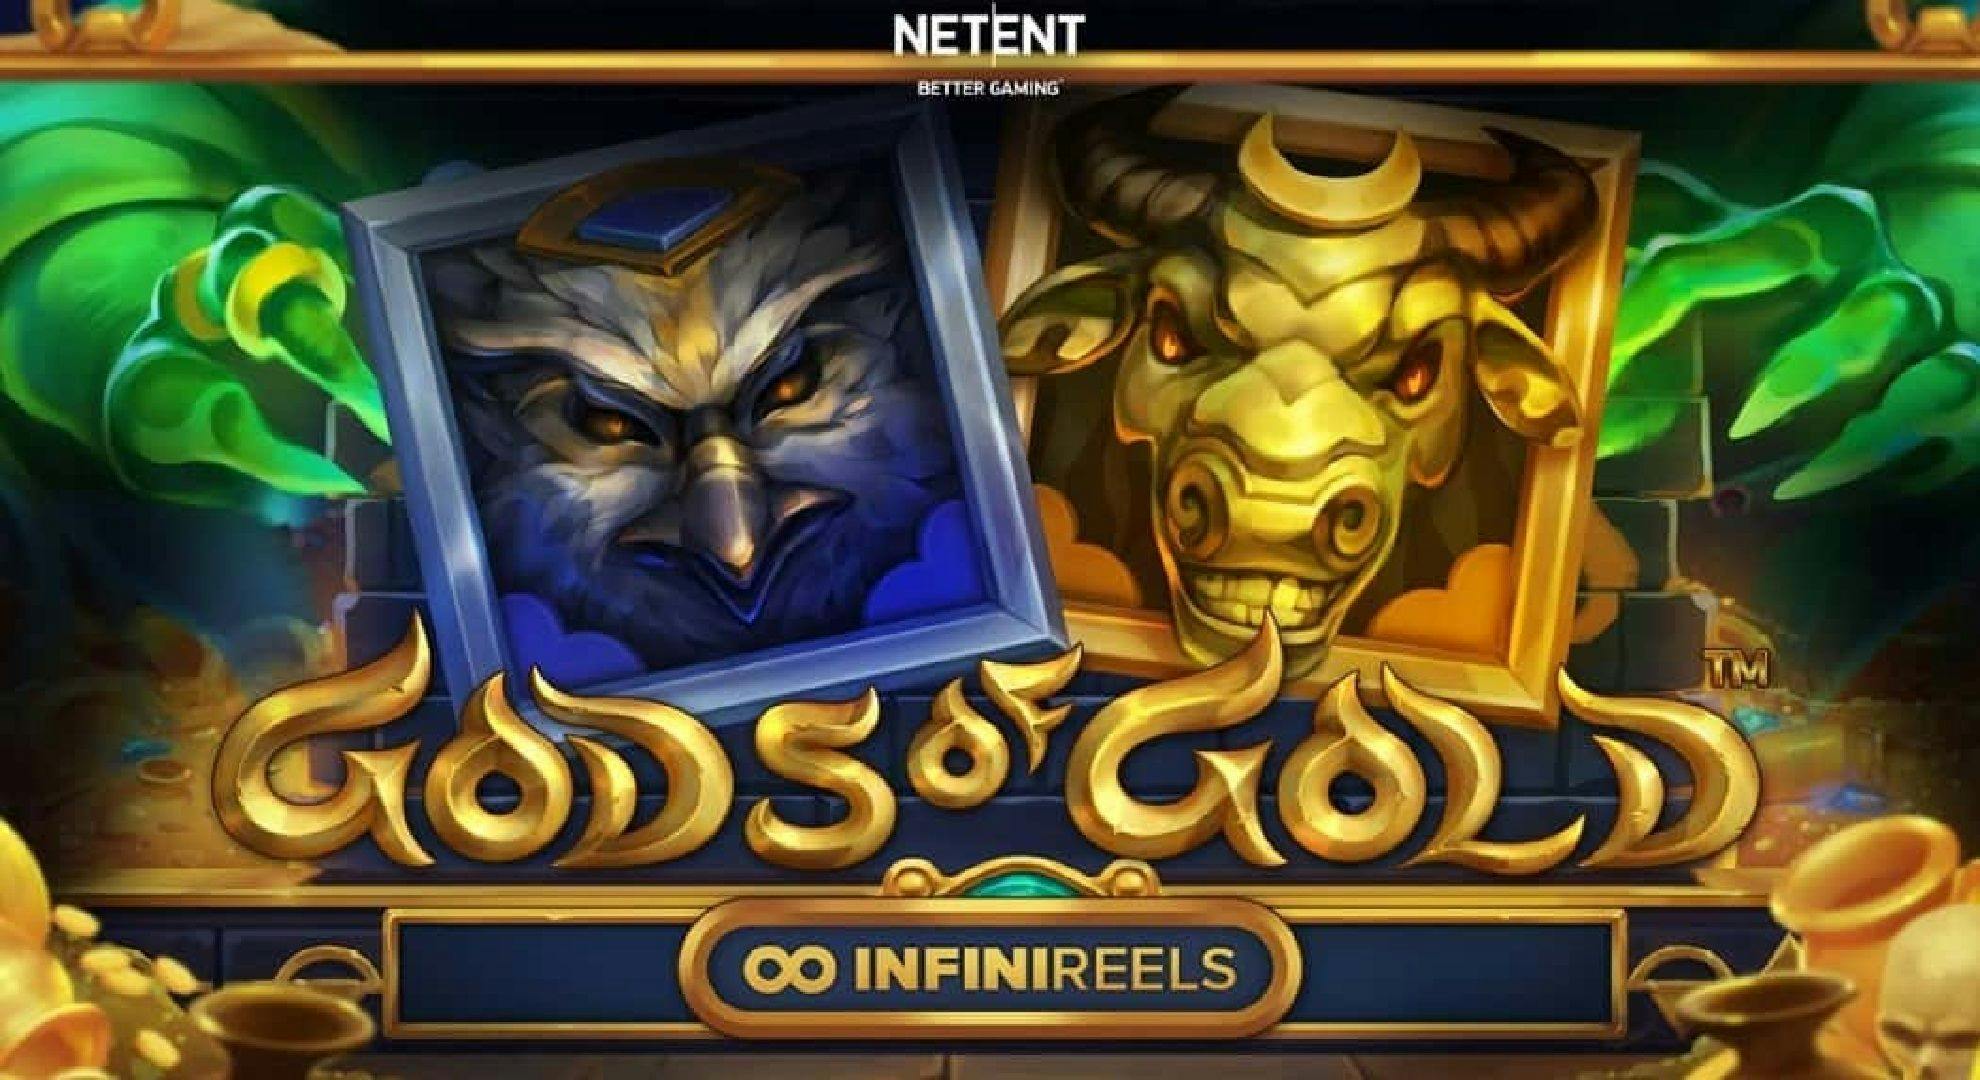 Gods Of Gold Infinireels Slot Online Free Play